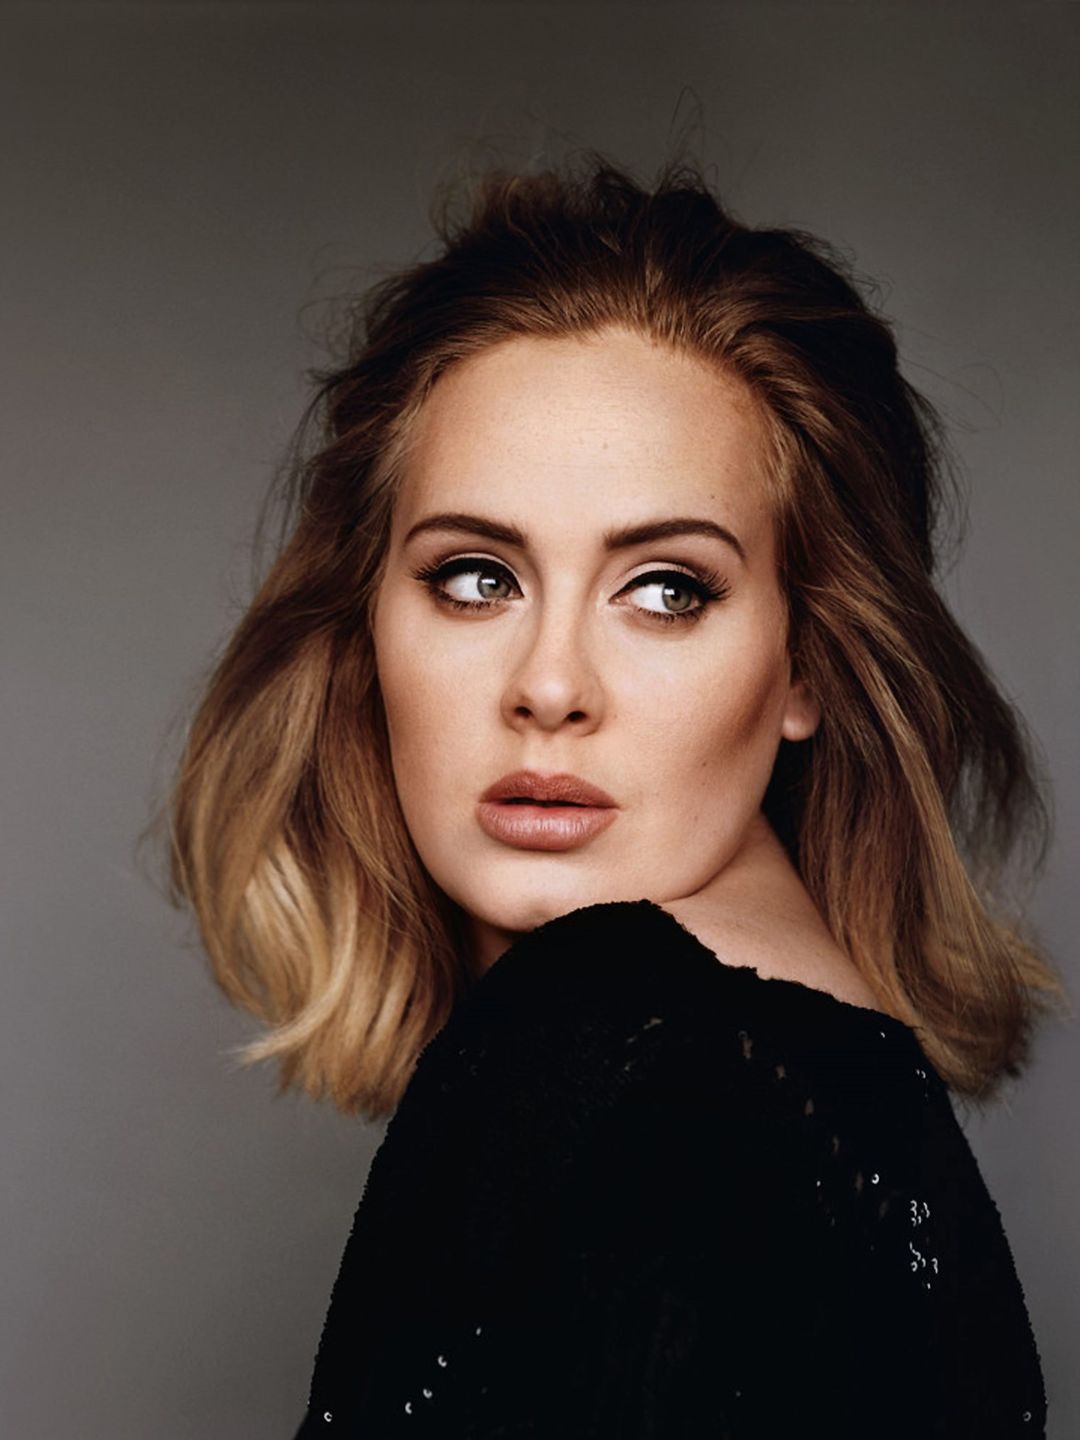 Adele ethnicity